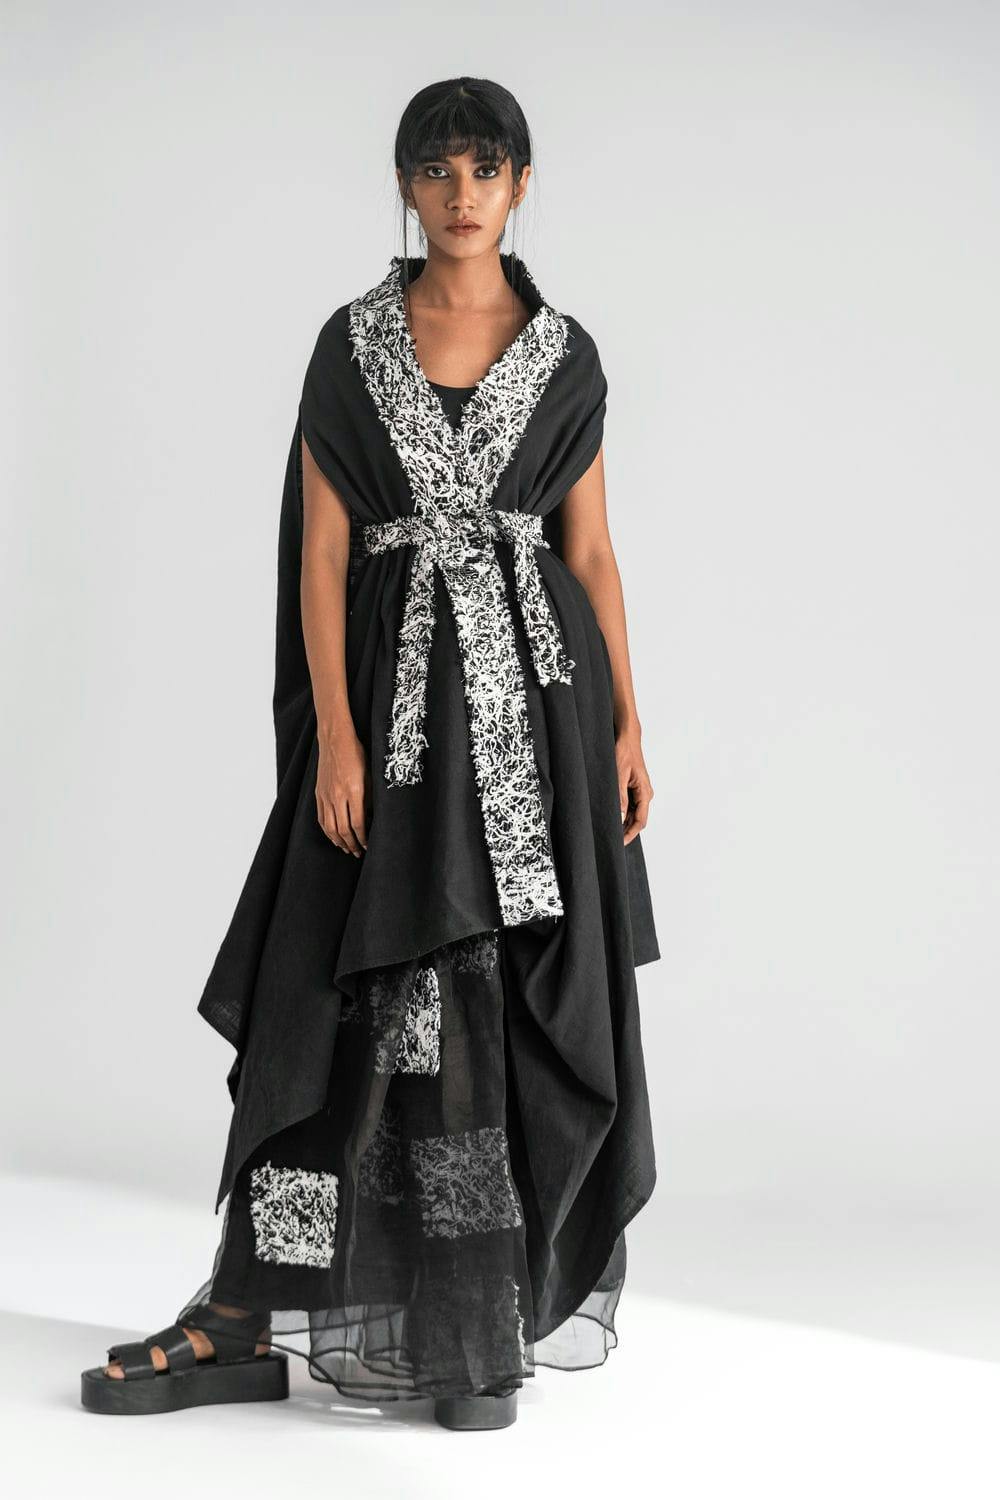 ATBW - Externals Saree/Dress, a product by ATBW